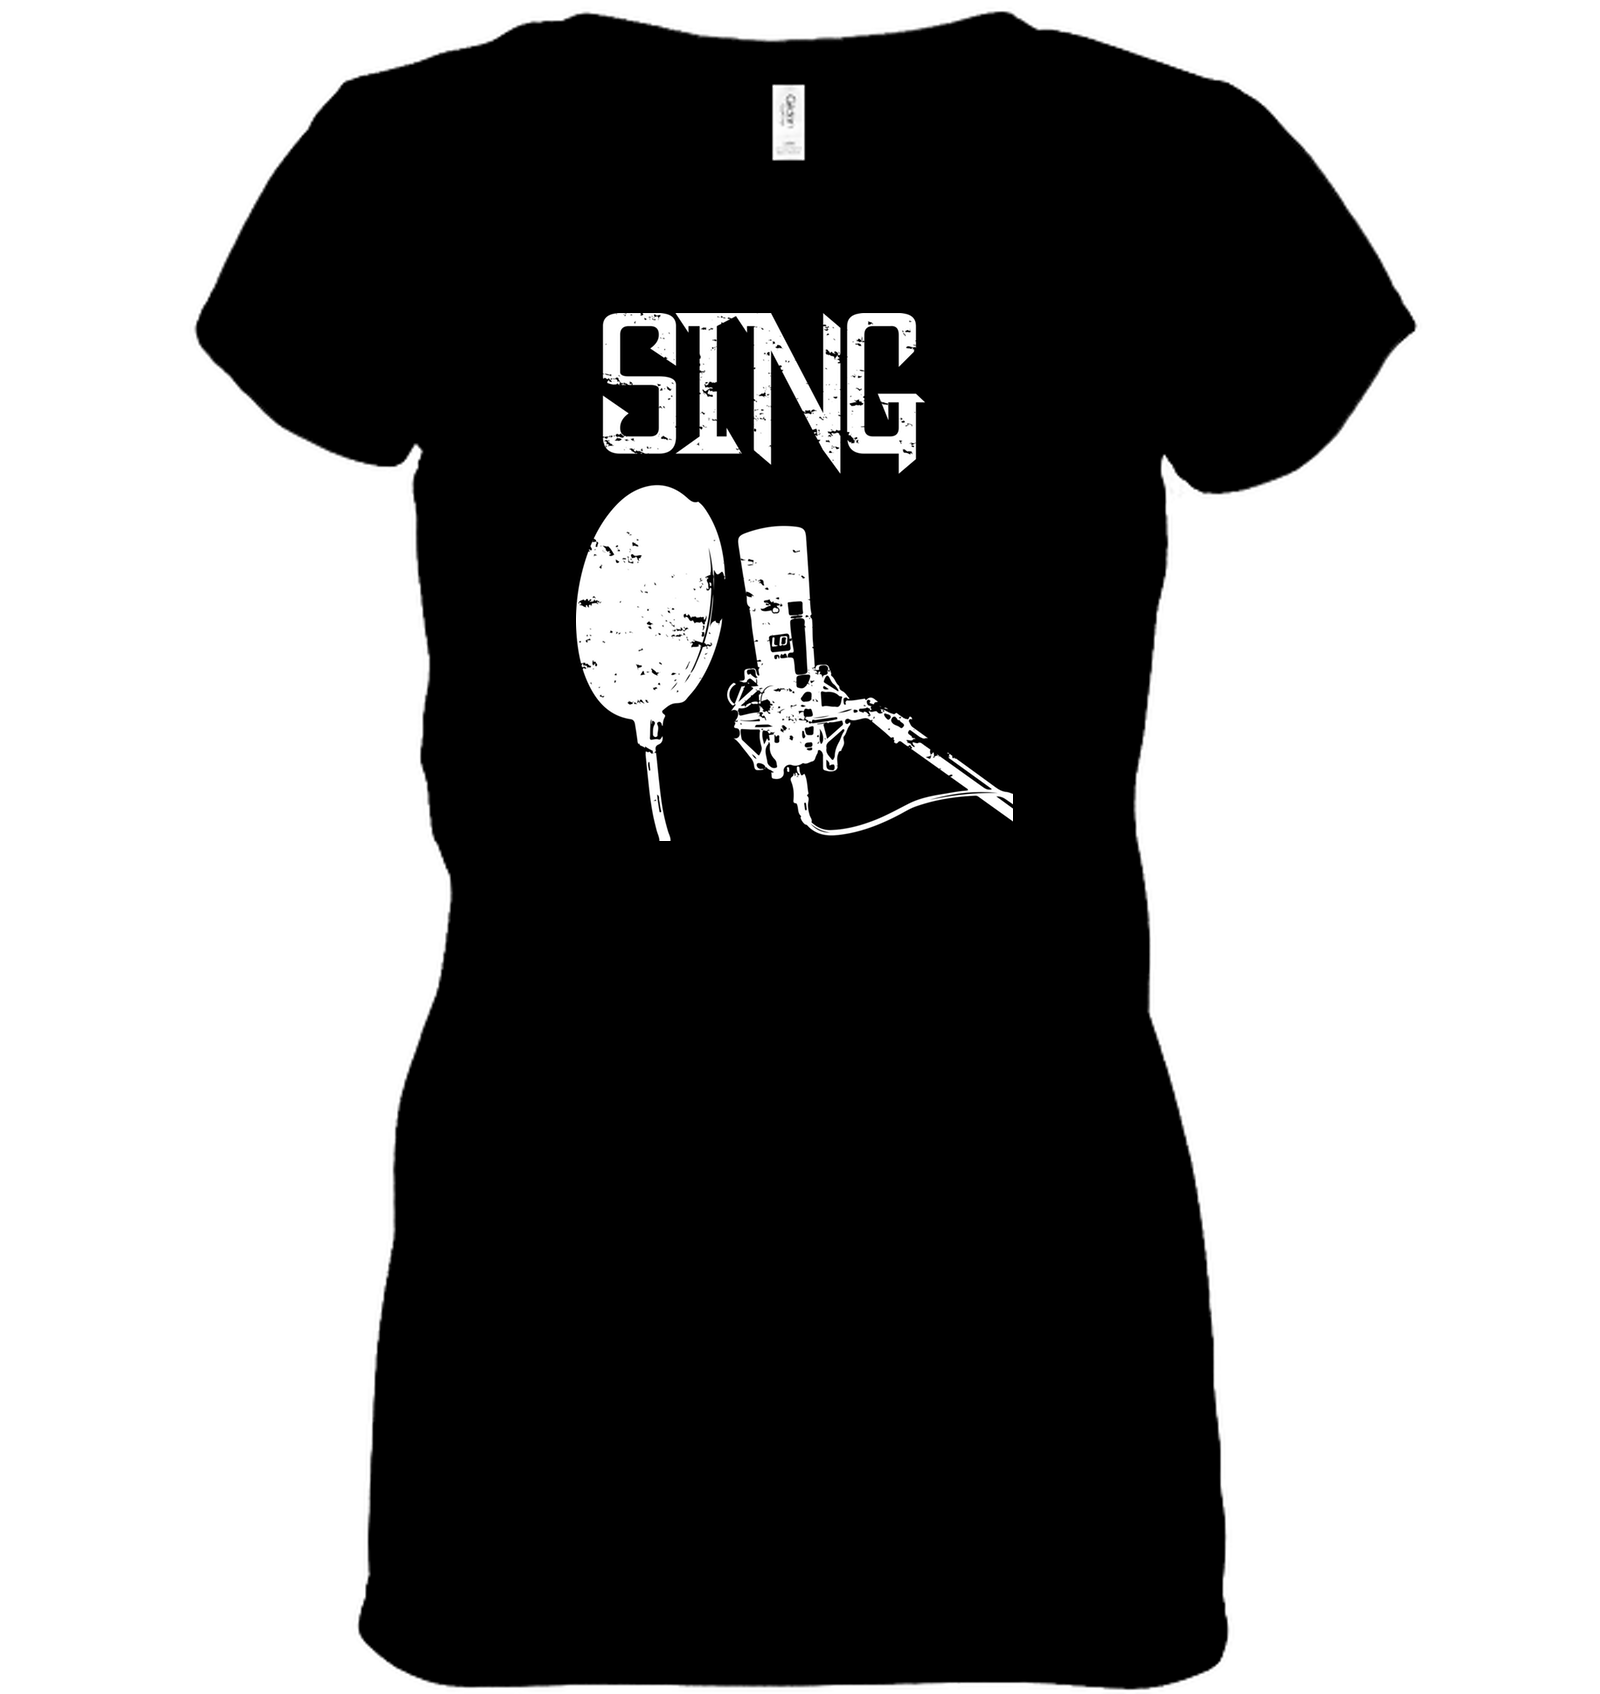 Sing - Hanes Women's Nano-T® V-Neck T-Shirt